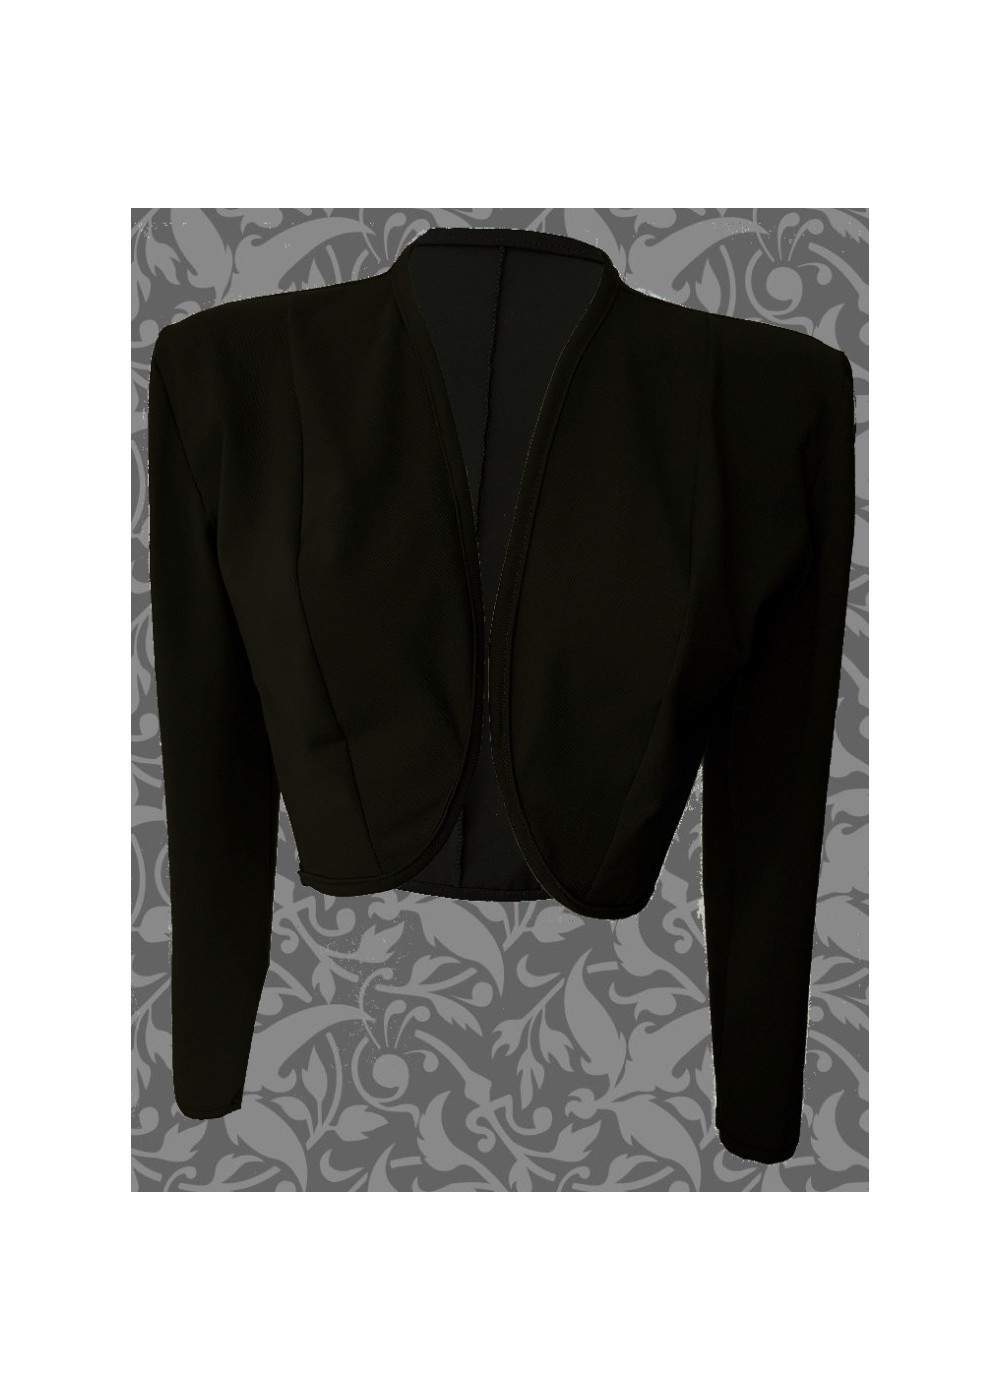 Sizes 34 - 52 Black Cotton Stretch Short Jacket from Magdeburg Prod... - Rabatt